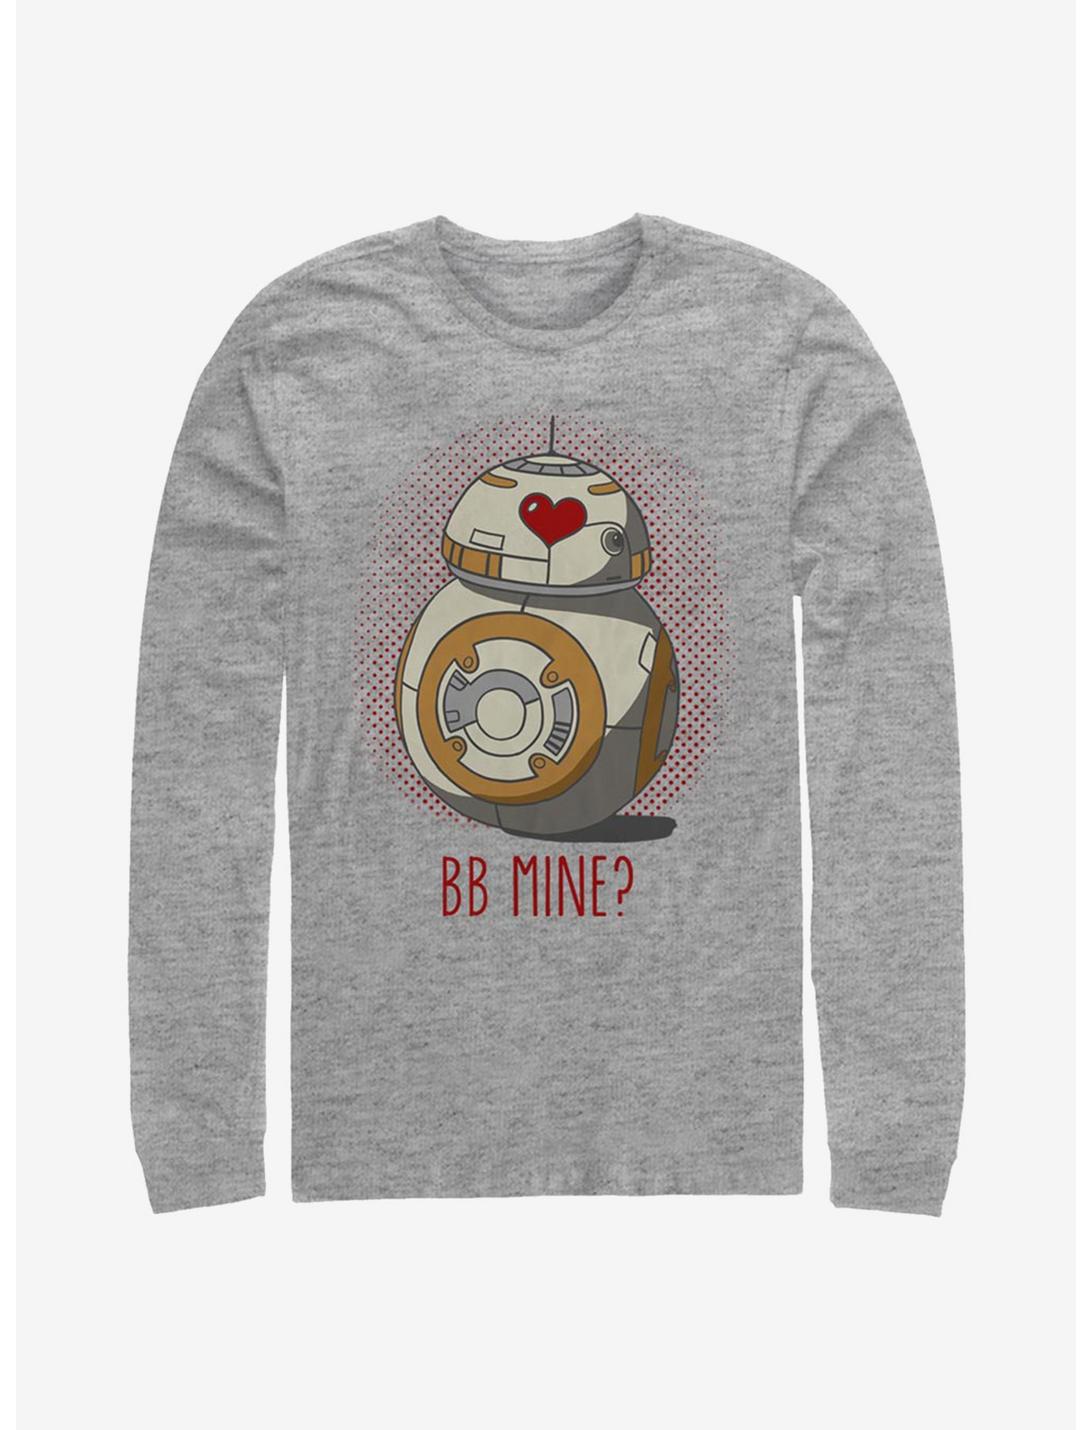 Star Wars BB-8 Mine Long-Sleeve T-Shirt, ATH HTR, hi-res